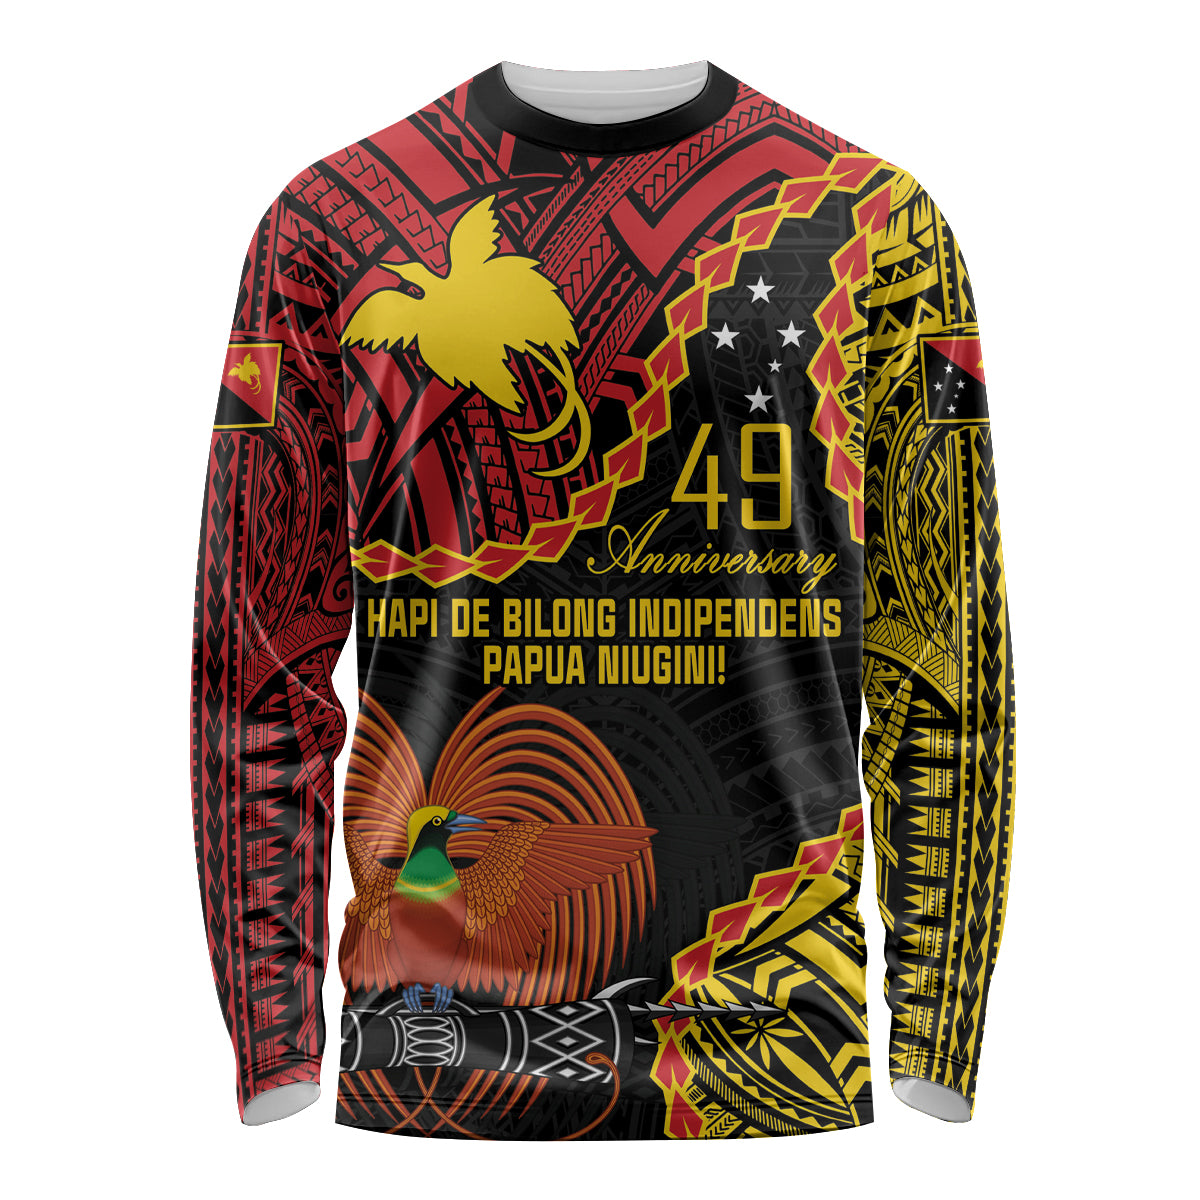 Personalised Papua New Guinea 49th Anniversary Long Sleeve Shirt Hapi De bilong Indipendens Papua Niugini